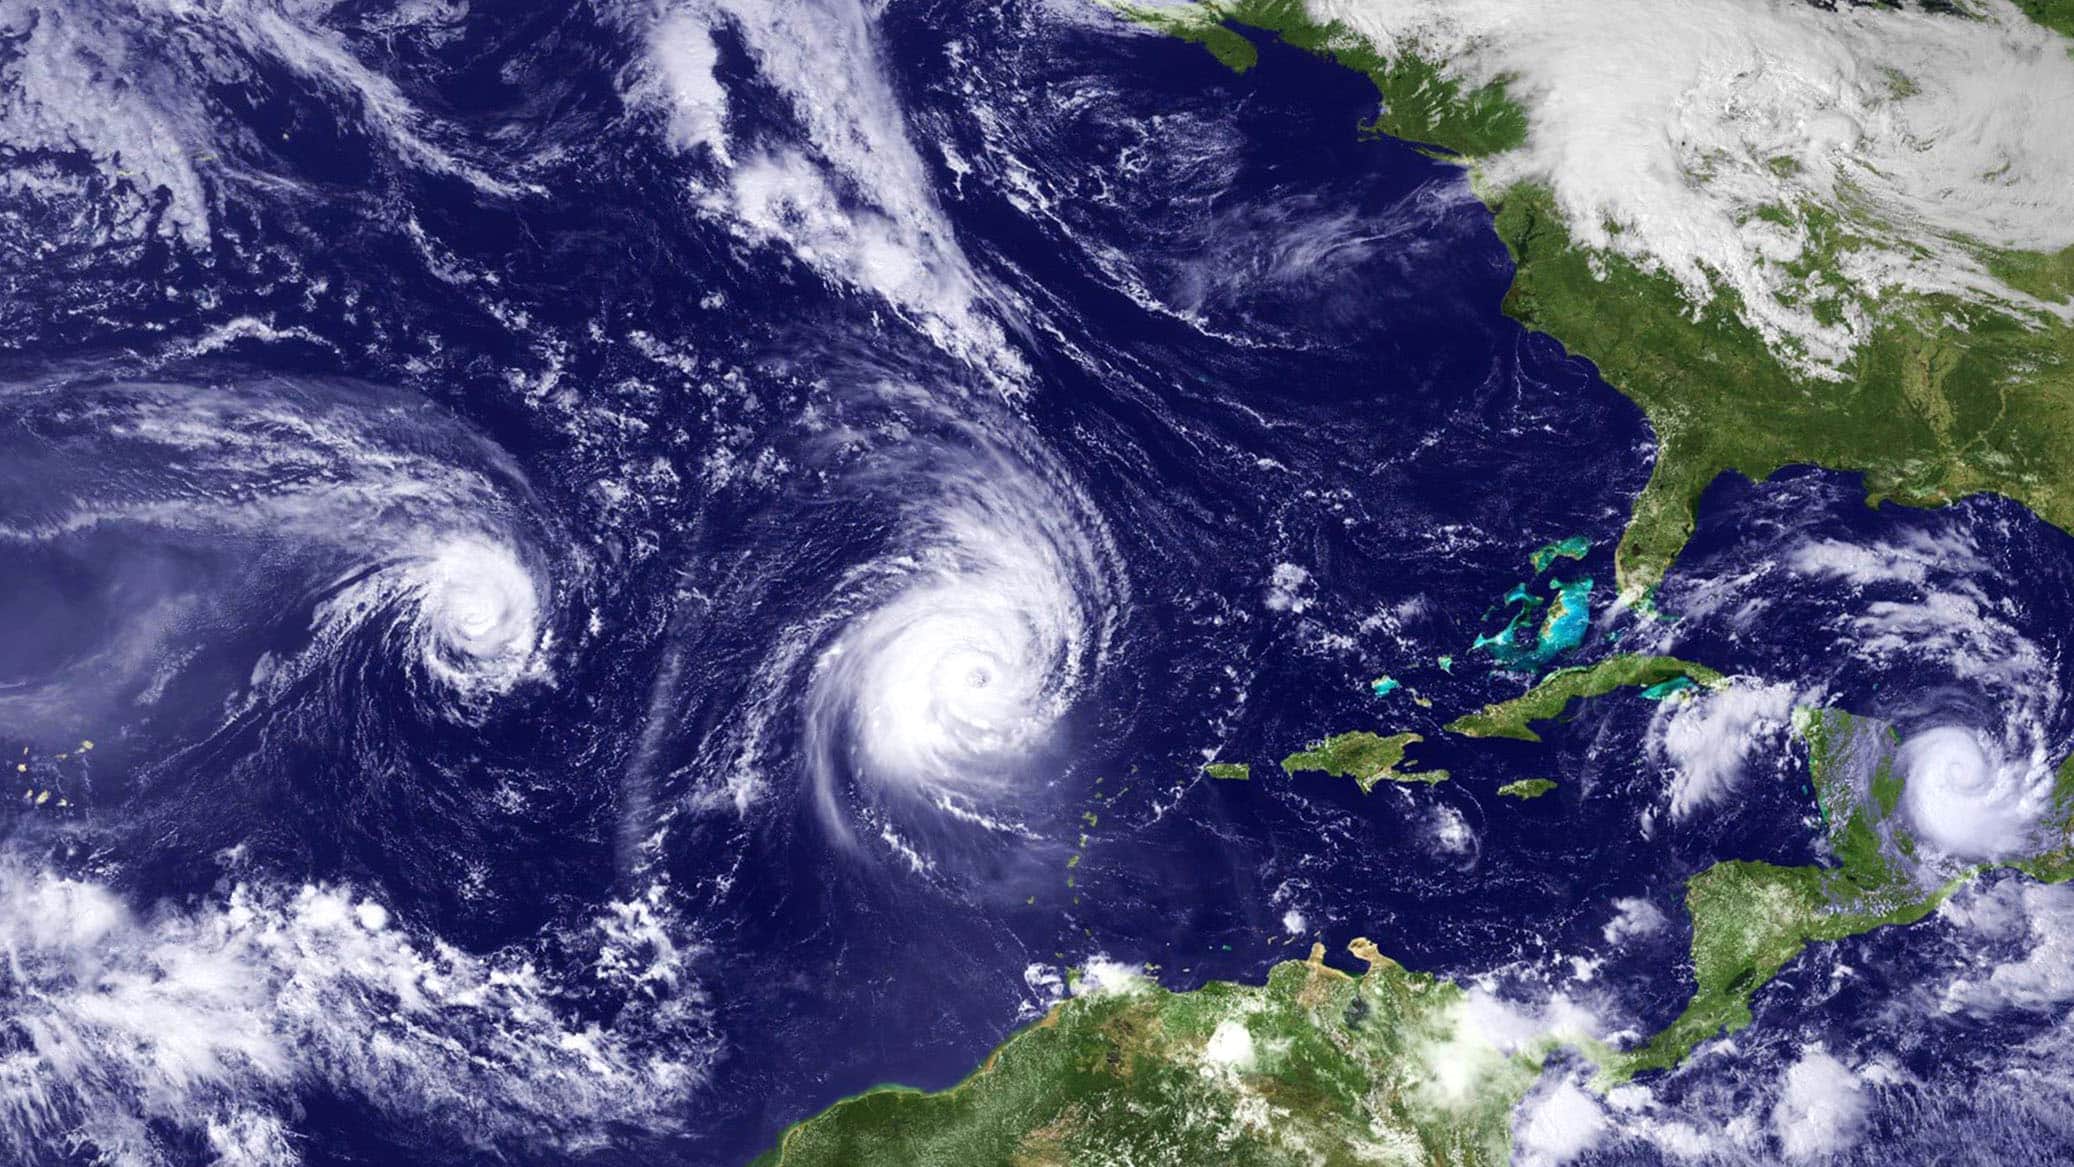 Через 2 шторм. Циклон из космоса. Снимки циклона из космоса. Циклон вид из космоса. Ураган с космоса.